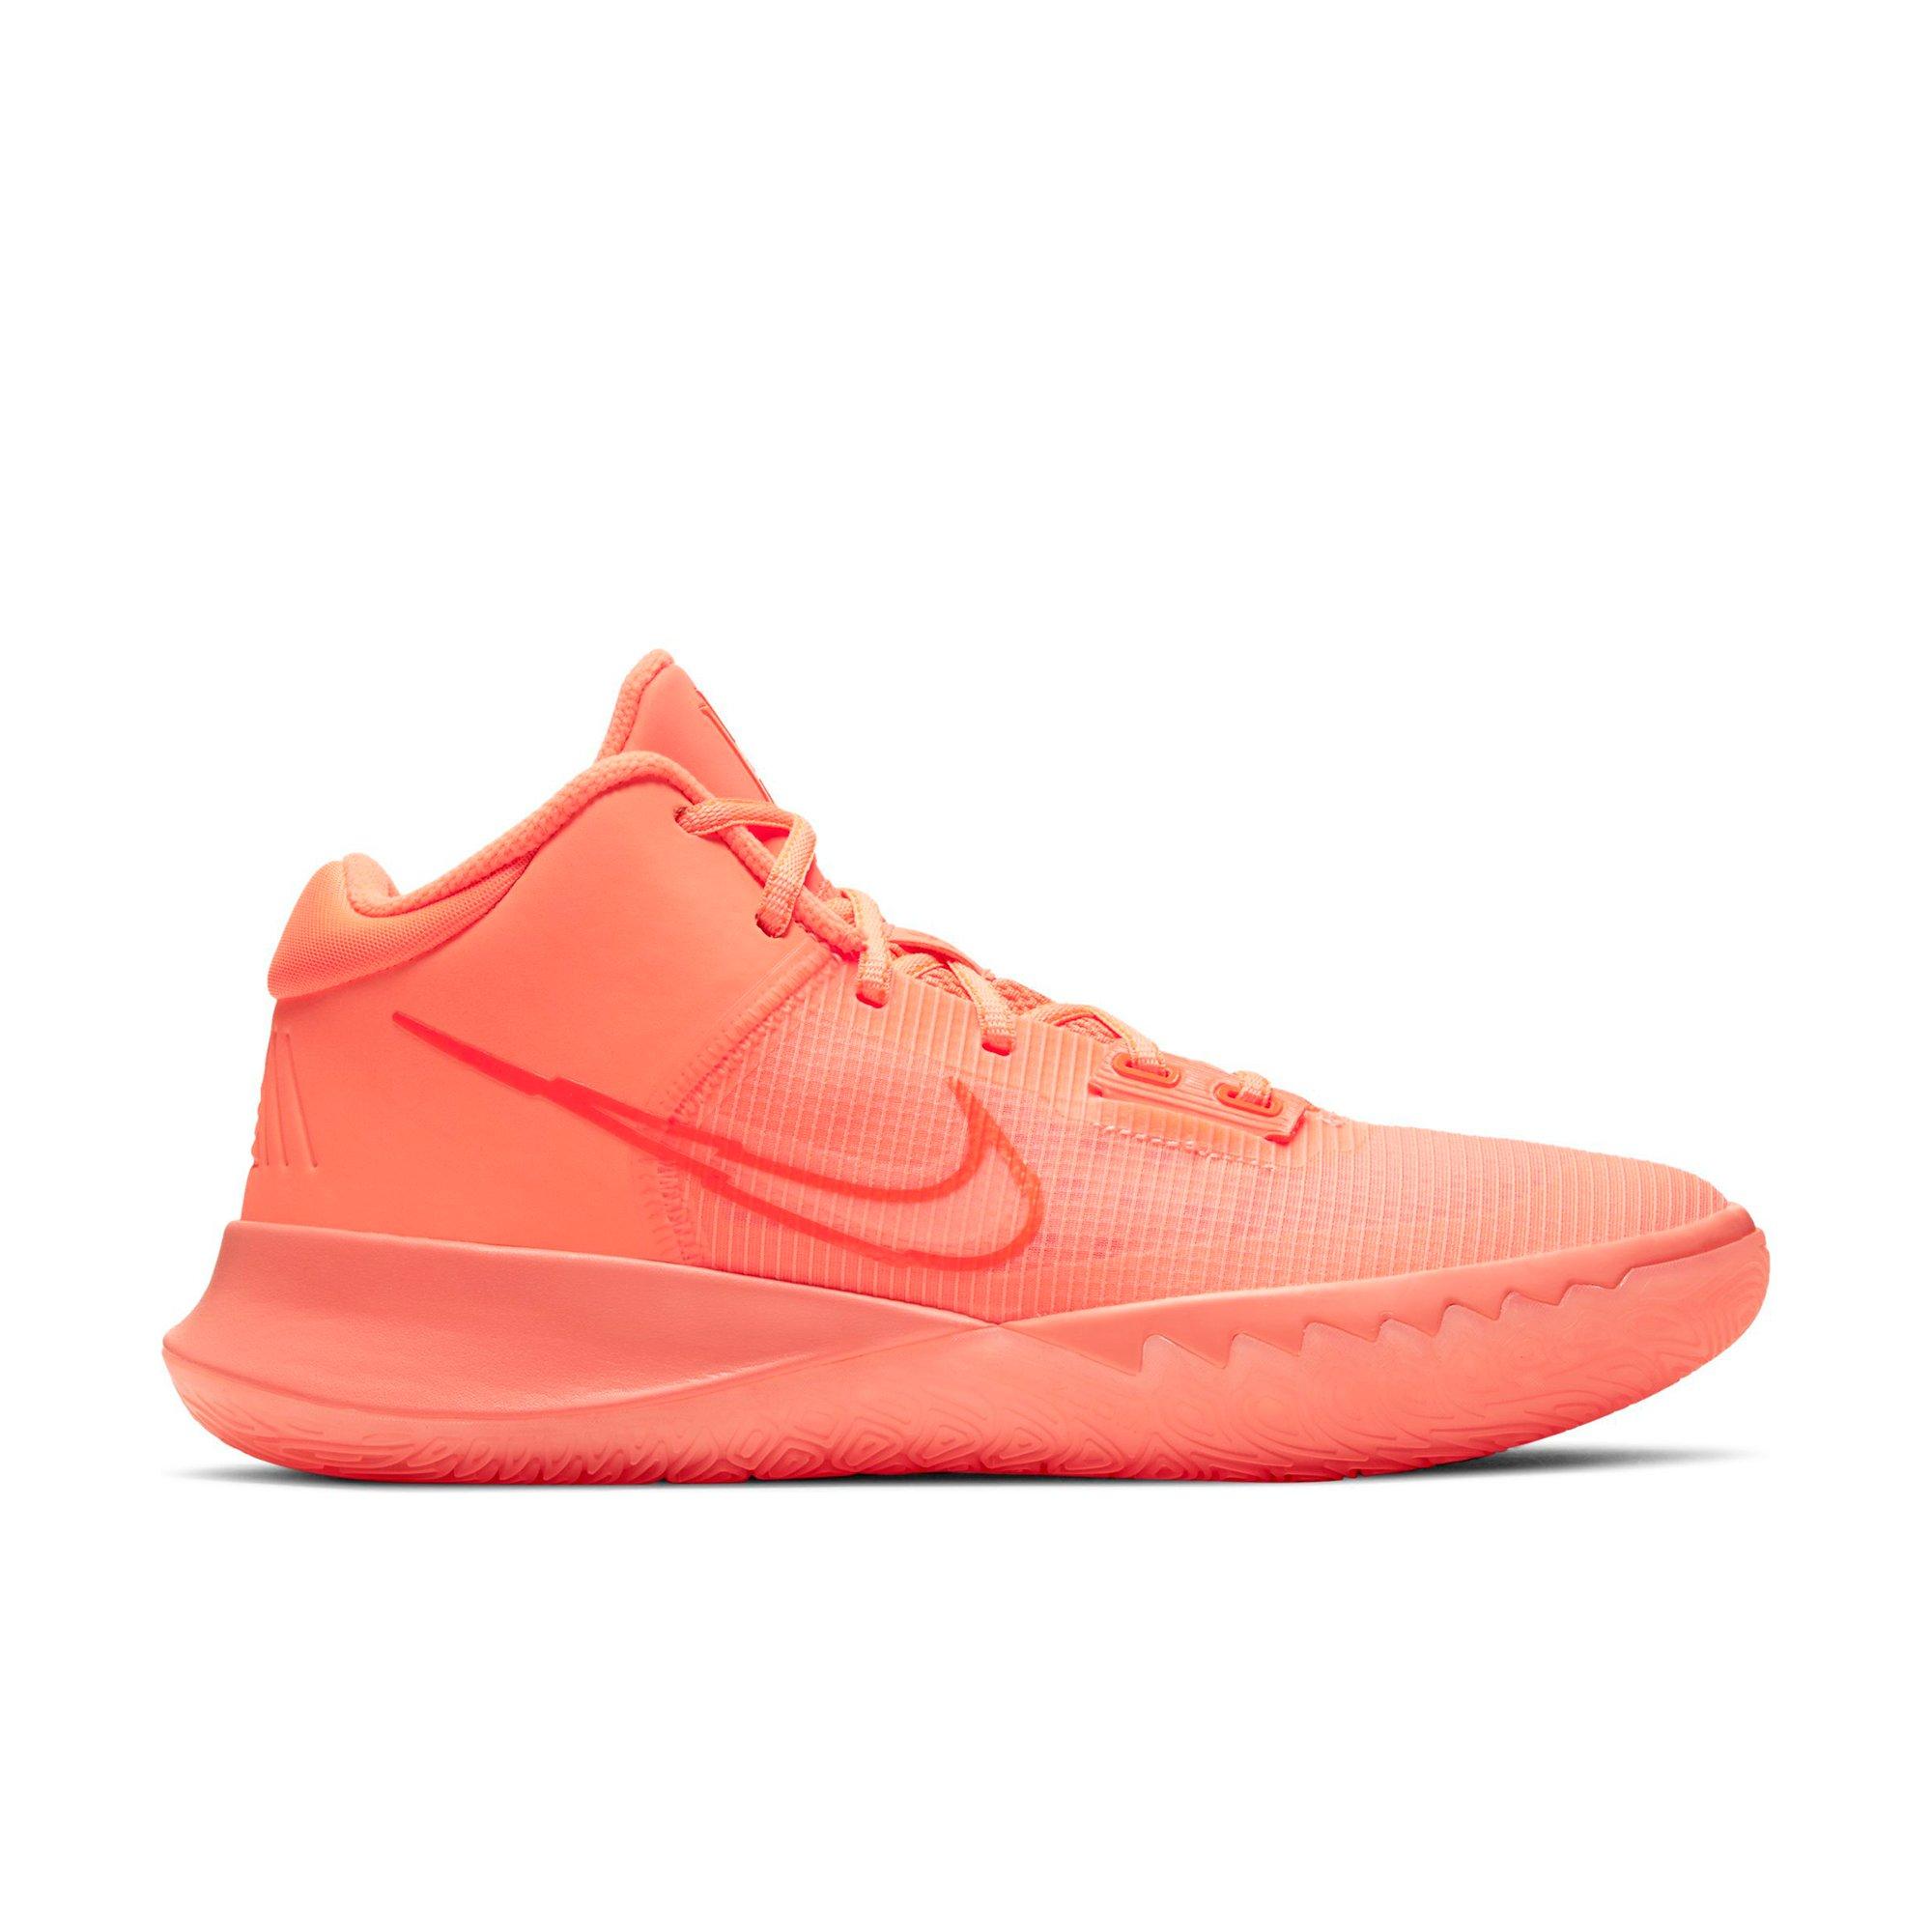 orange kyrie shoes